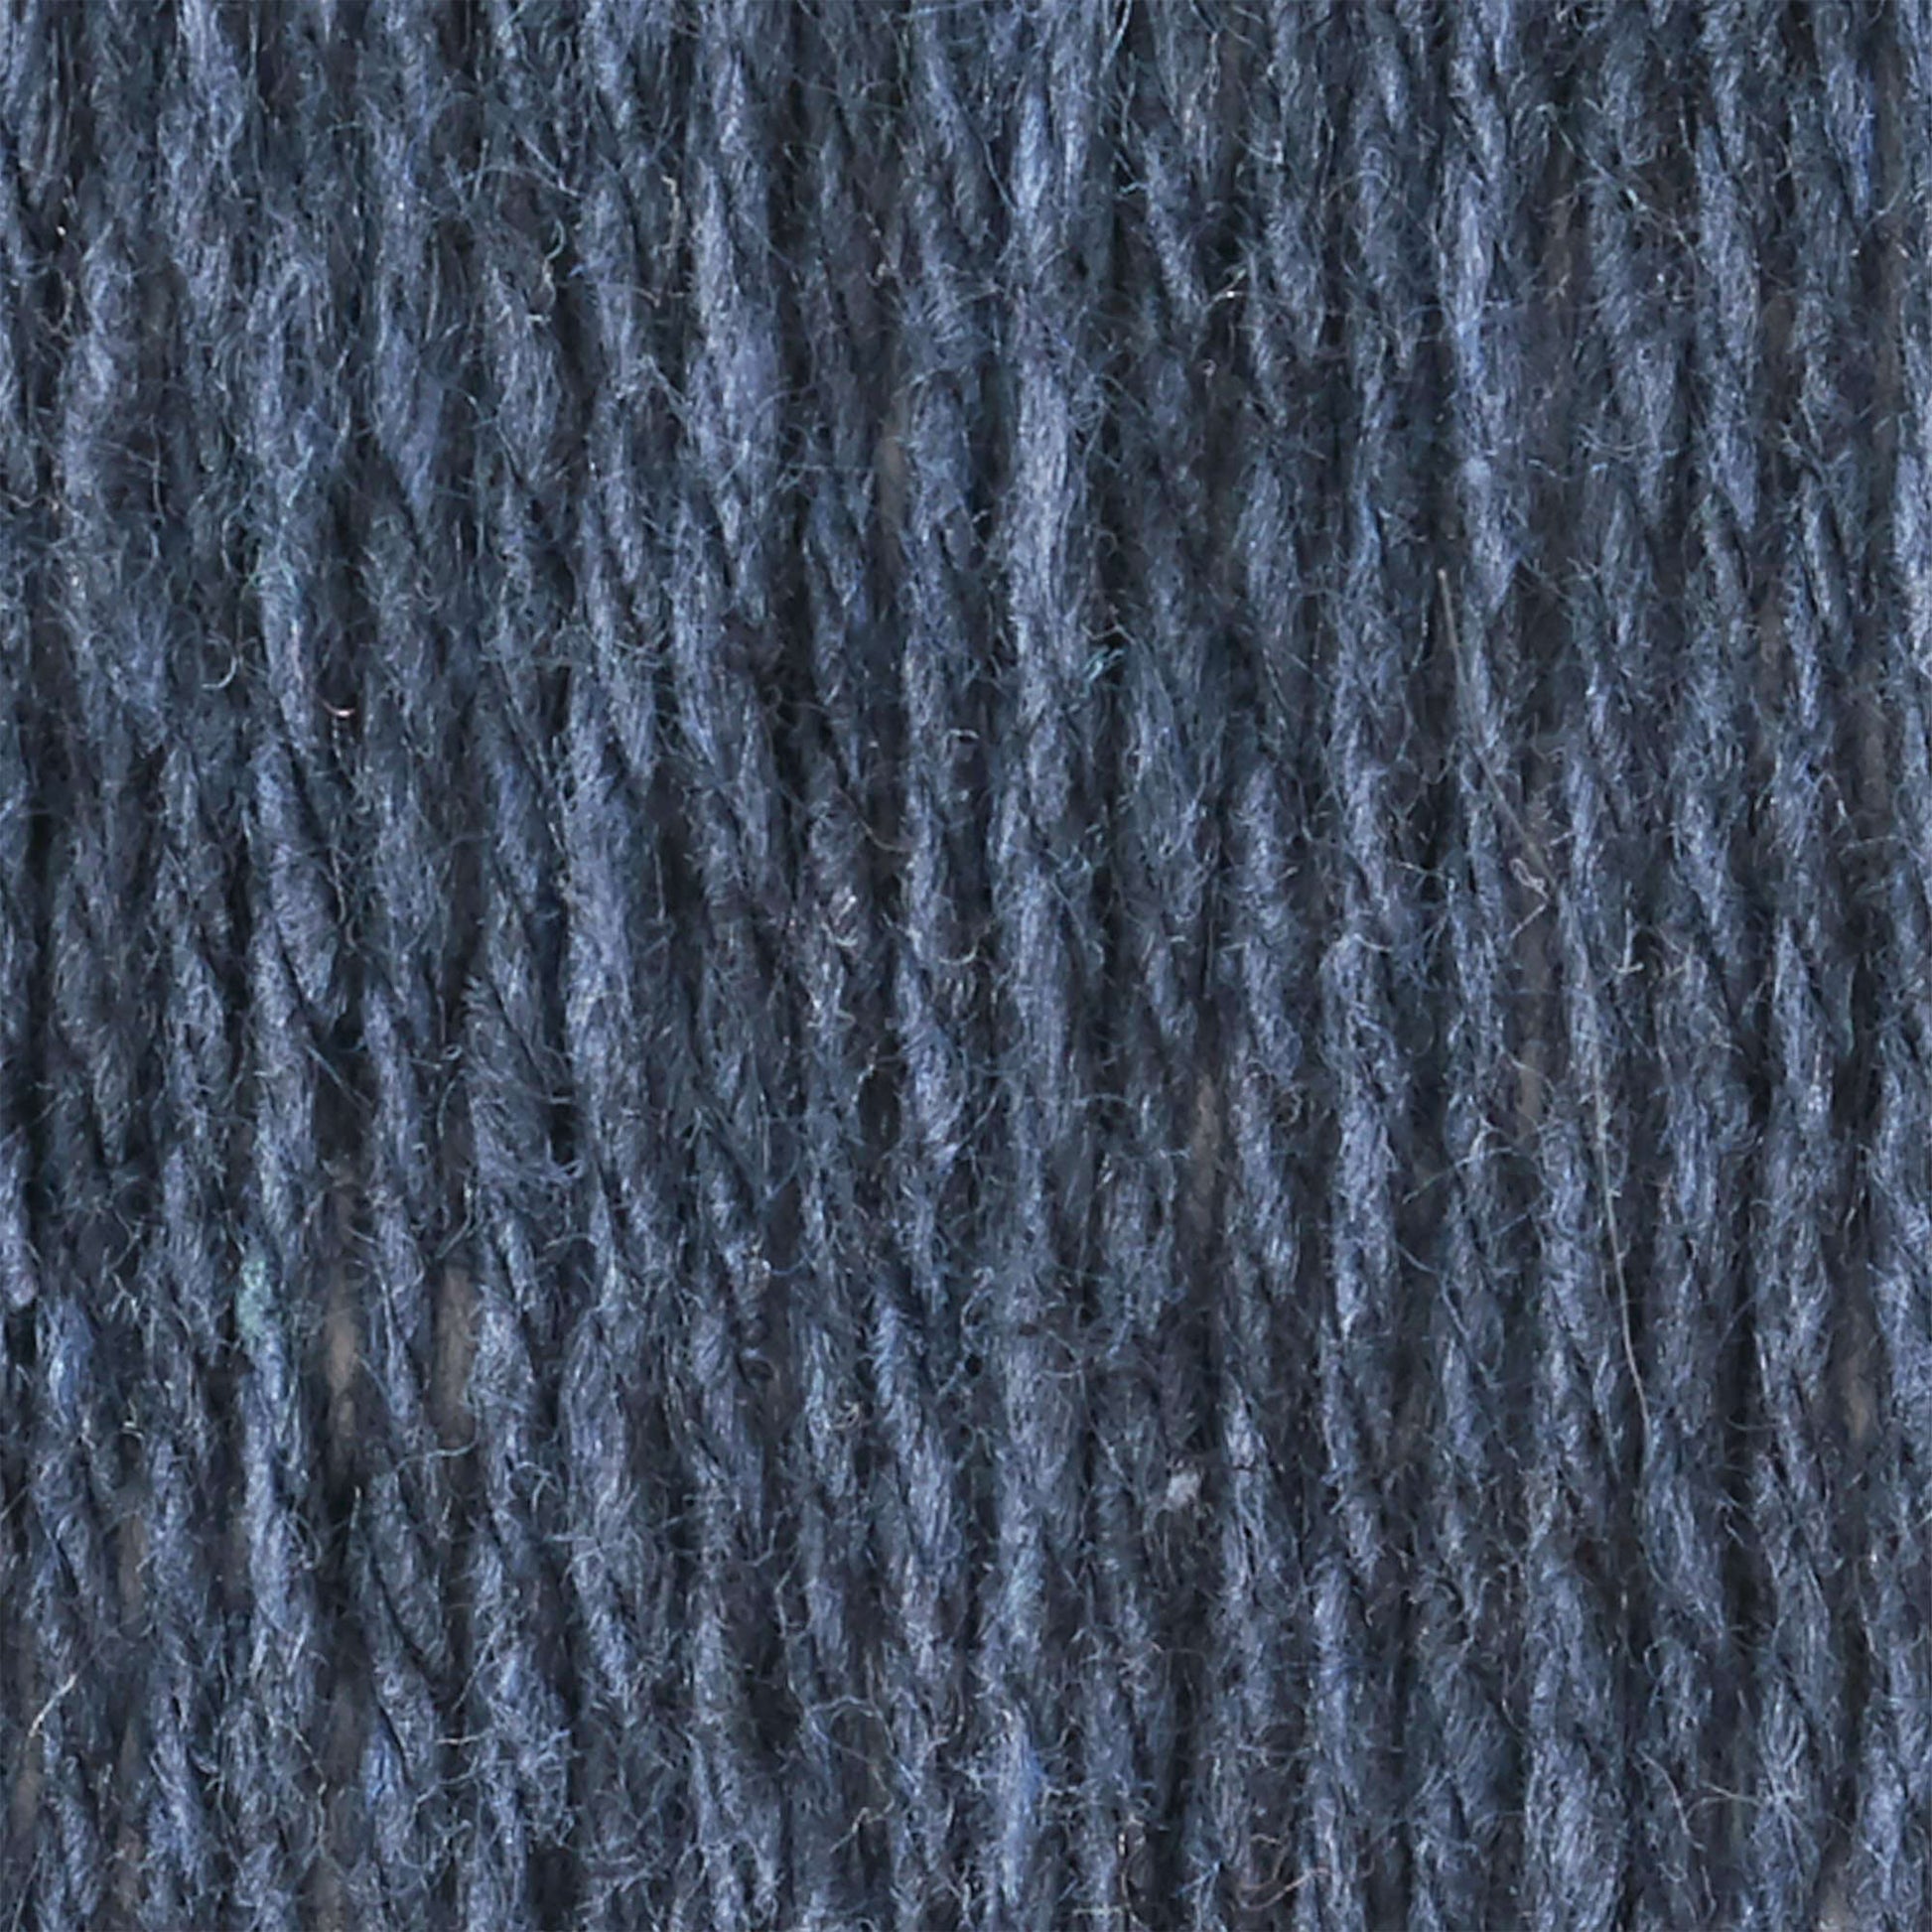 Lily Sugar'N Cream Poppy Yarn - 6 Pack of 57g/2oz - Cotton - 4 Medium  (Worsted) - 95 Yards - Knitting/Crochet